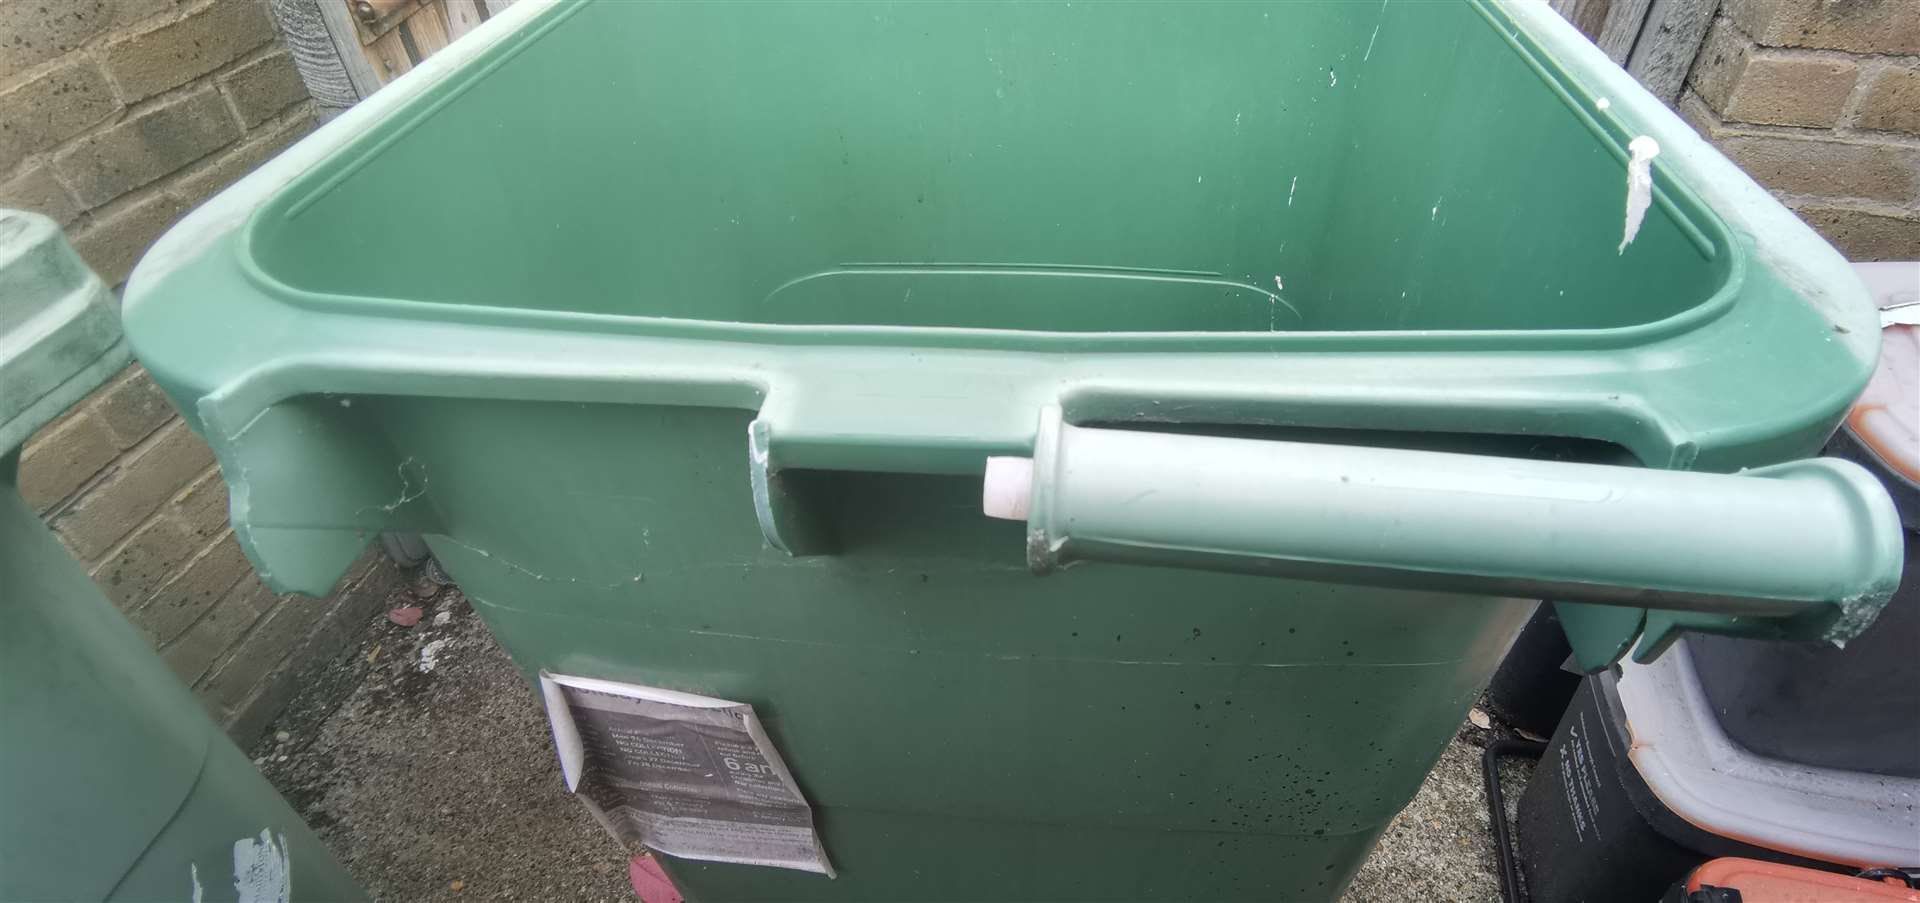 Tim Spencer's broken waste bin is 'still serviceable' says council